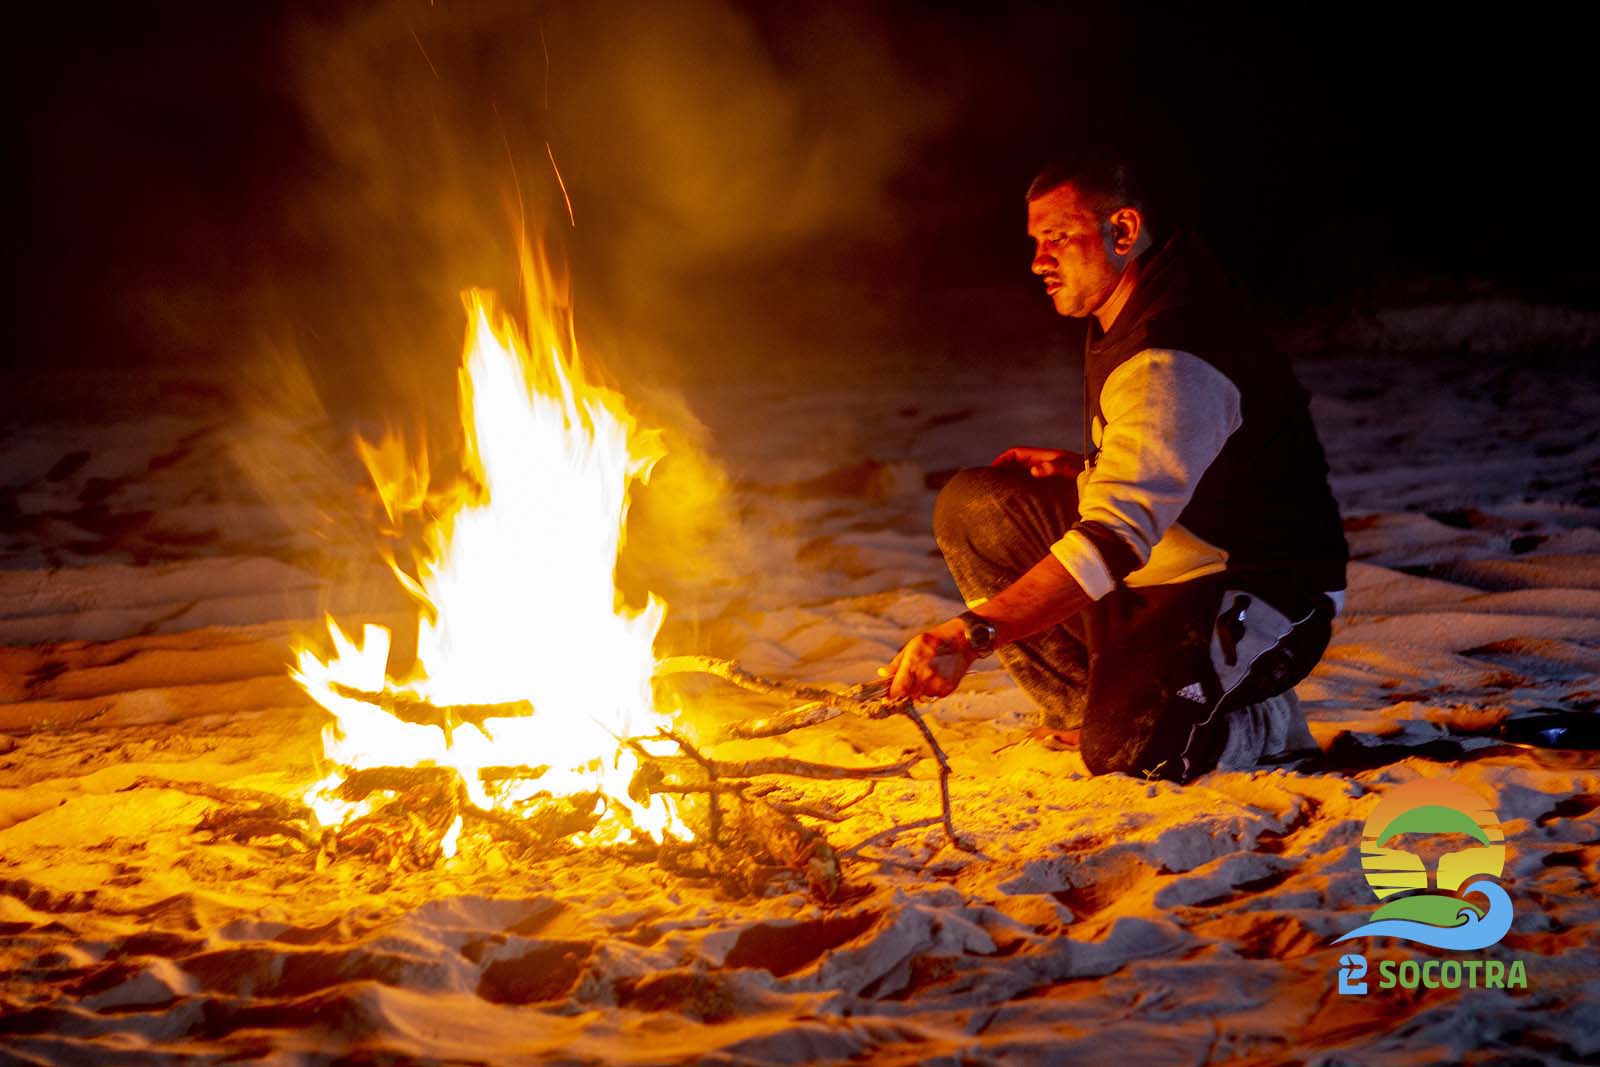 Arher camping area campfire, Socotra Island